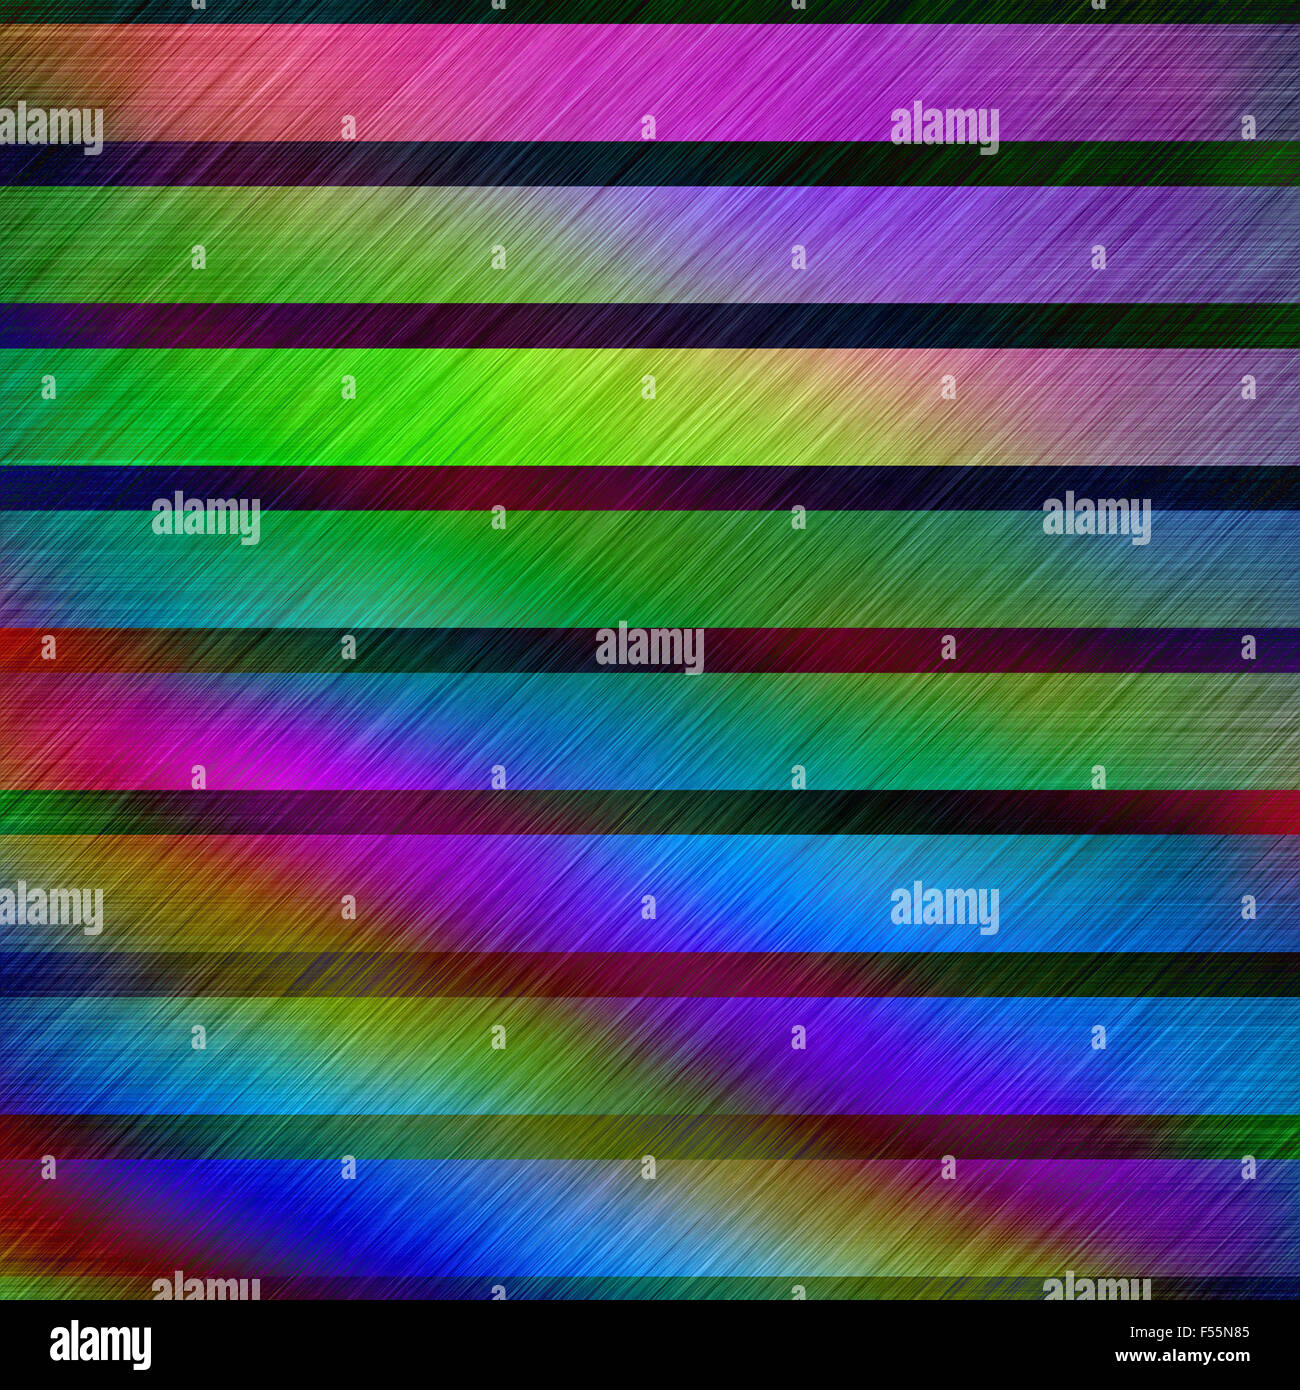 Rainbow colours rough metallic surface abstract pattern illustration. Stock Photo